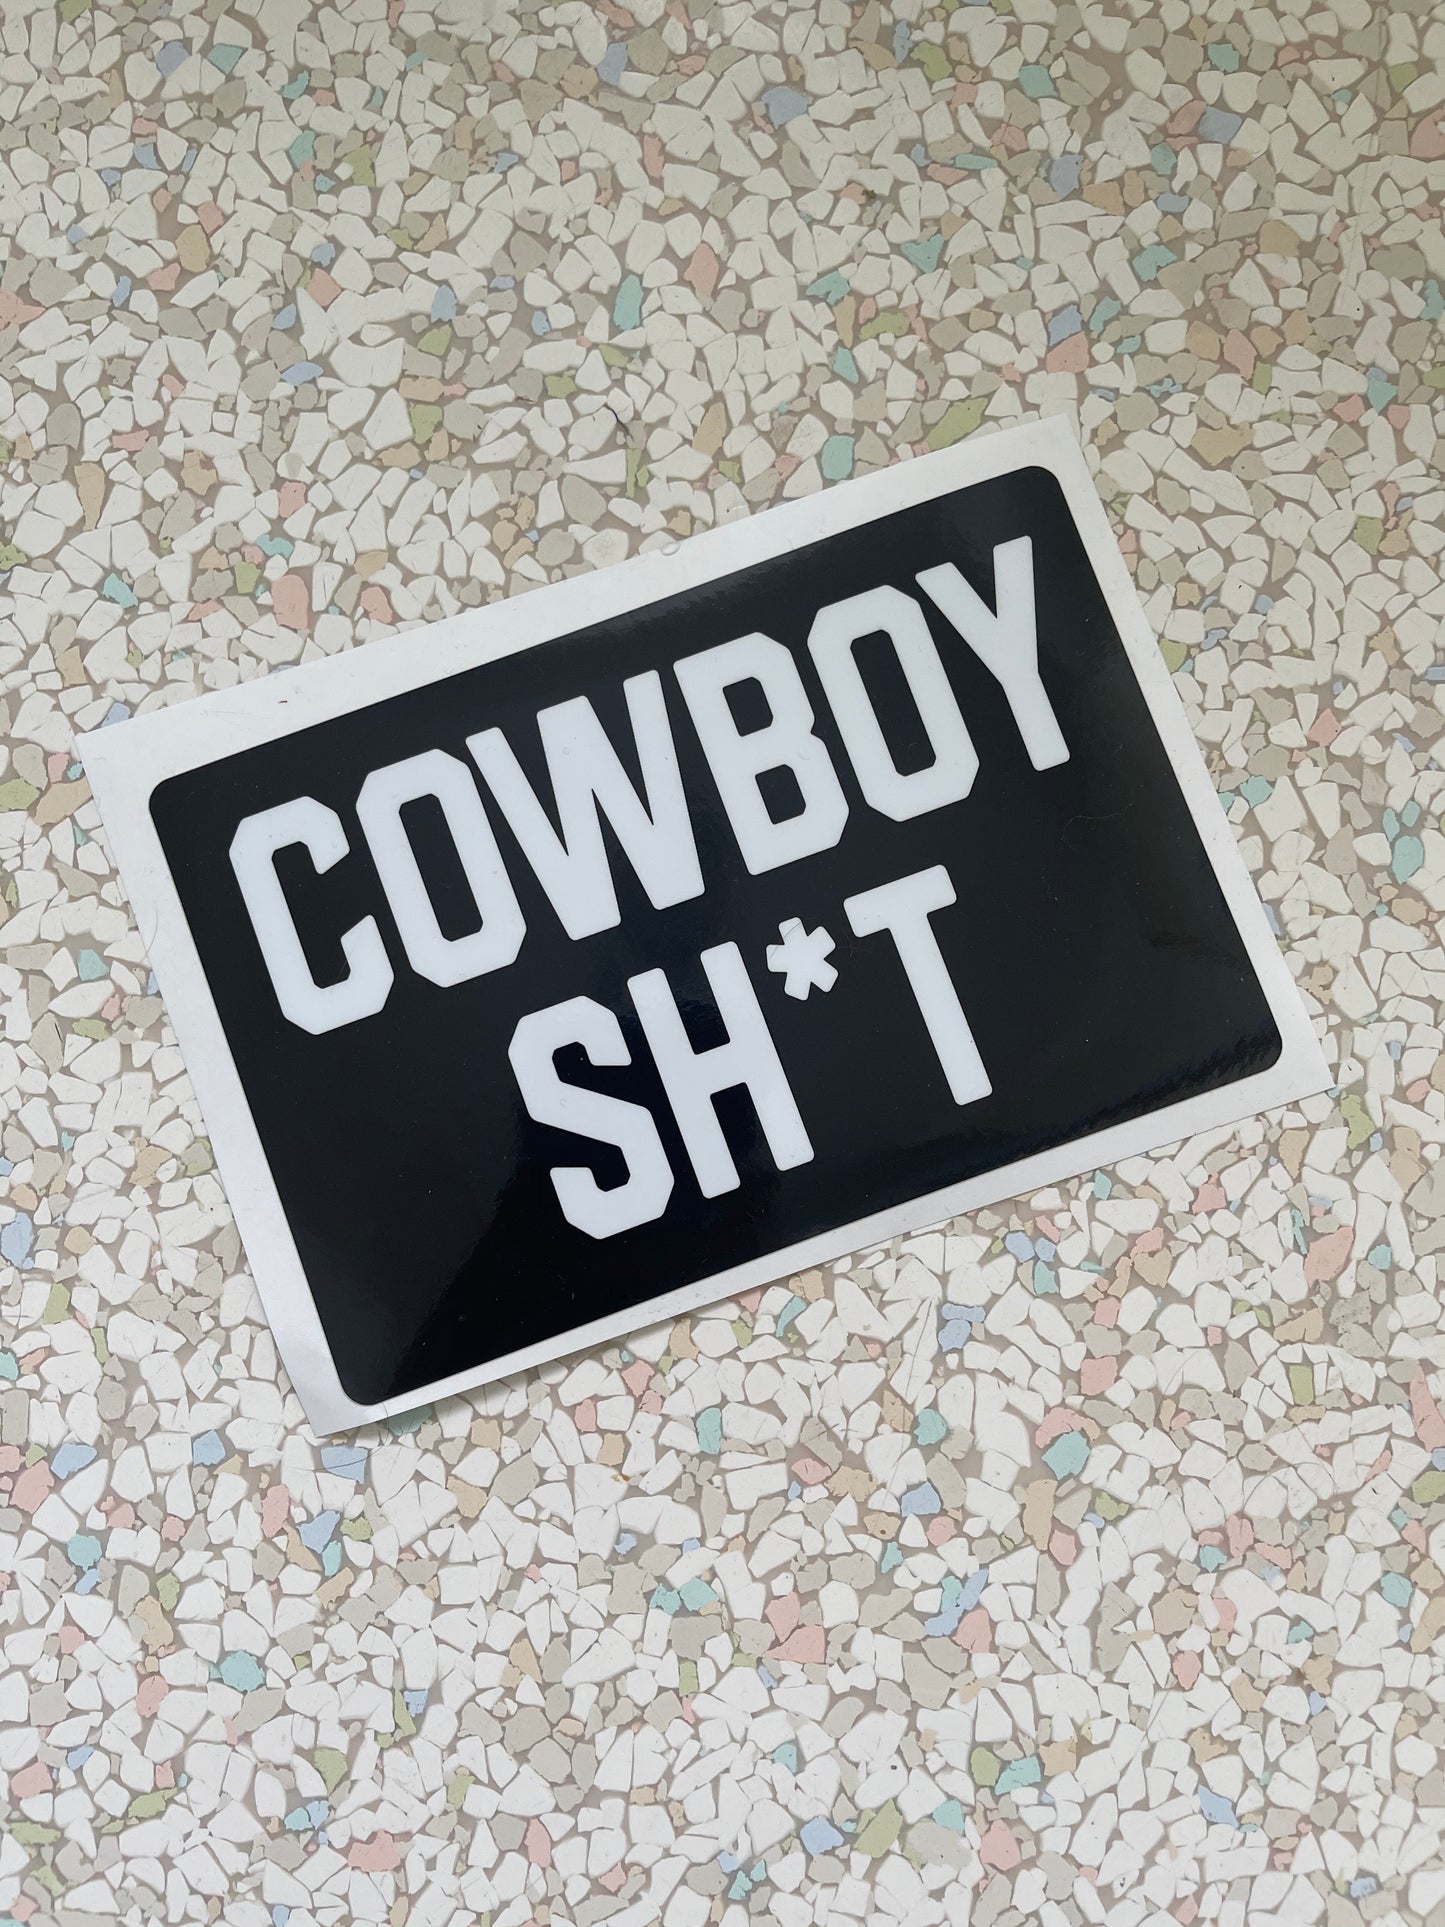 Cowboy Sh*t - 4"x6" Sticker